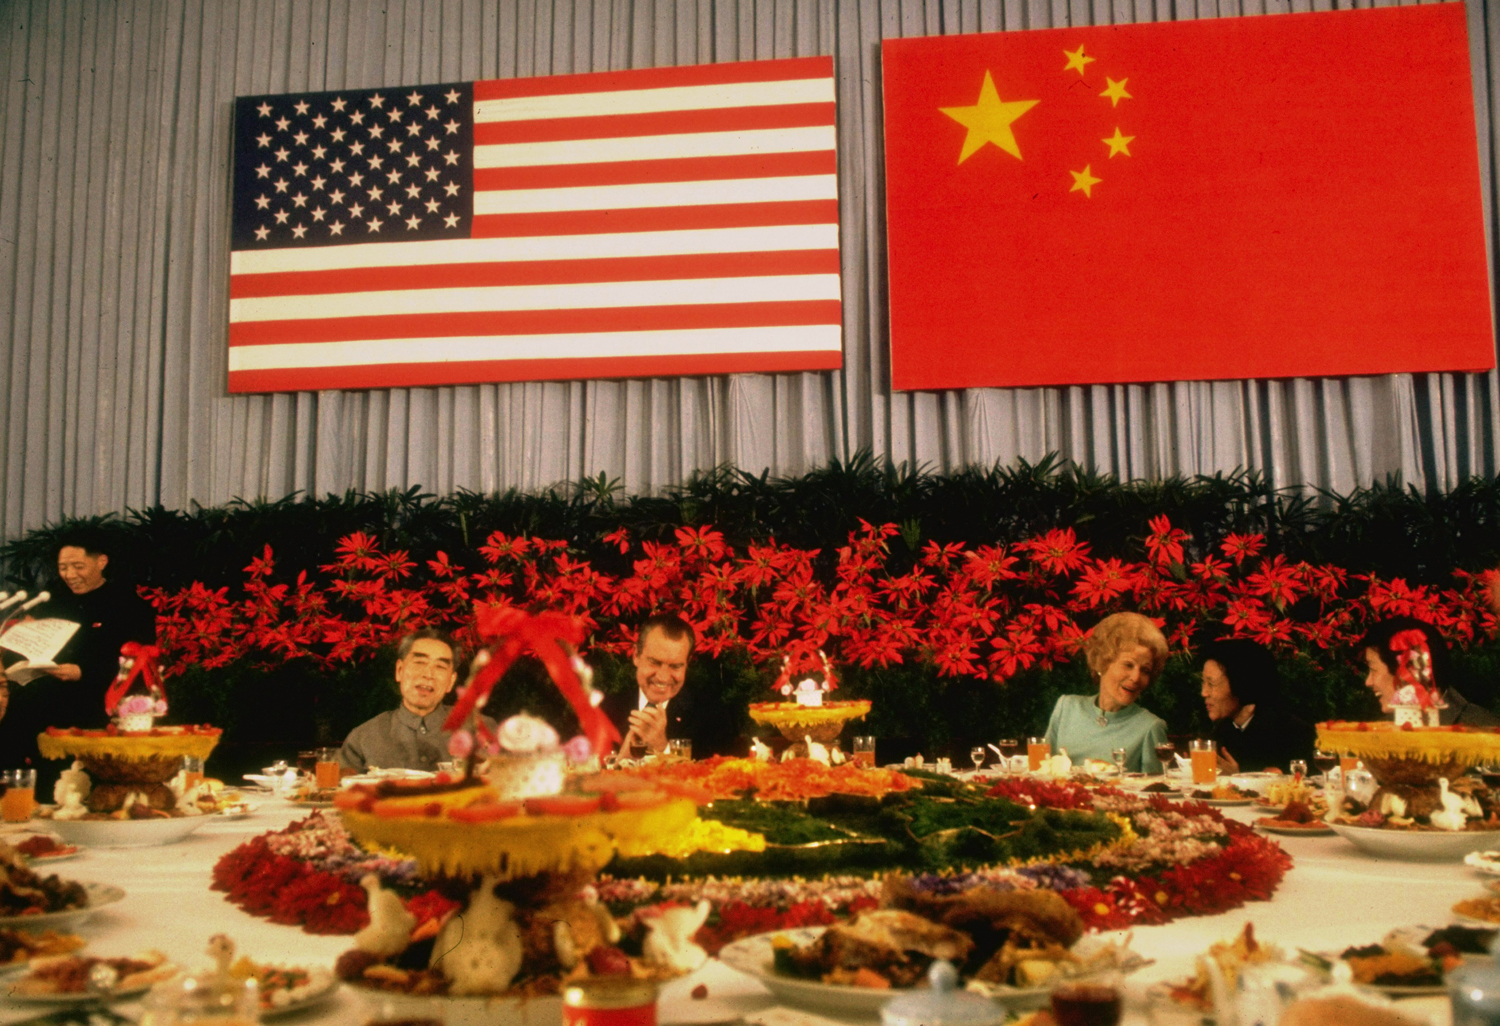 Chinese Premier Chou En-lai, President Richard Nixon, Pat Nixon and Mrs. Chou En-lai at an official banquet during Nixon's landmark visit to China in 1972.